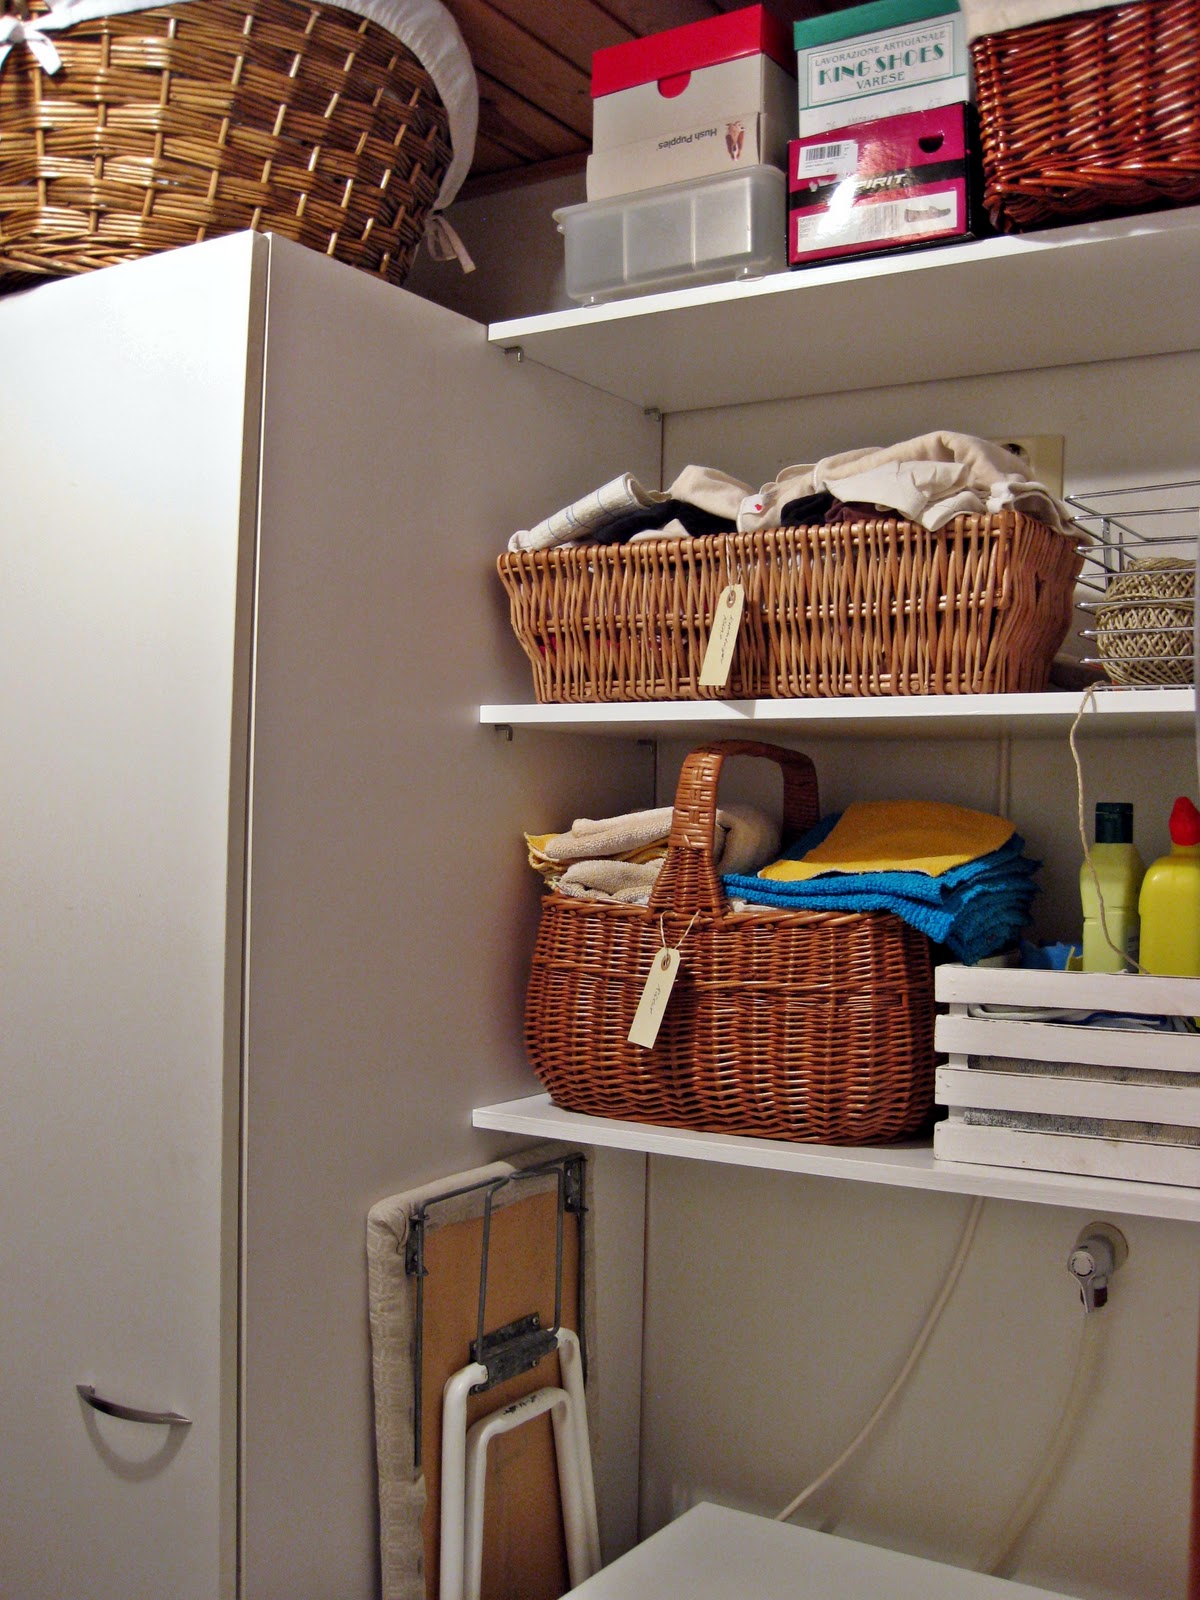 Onshore: Shelves over the washing machine